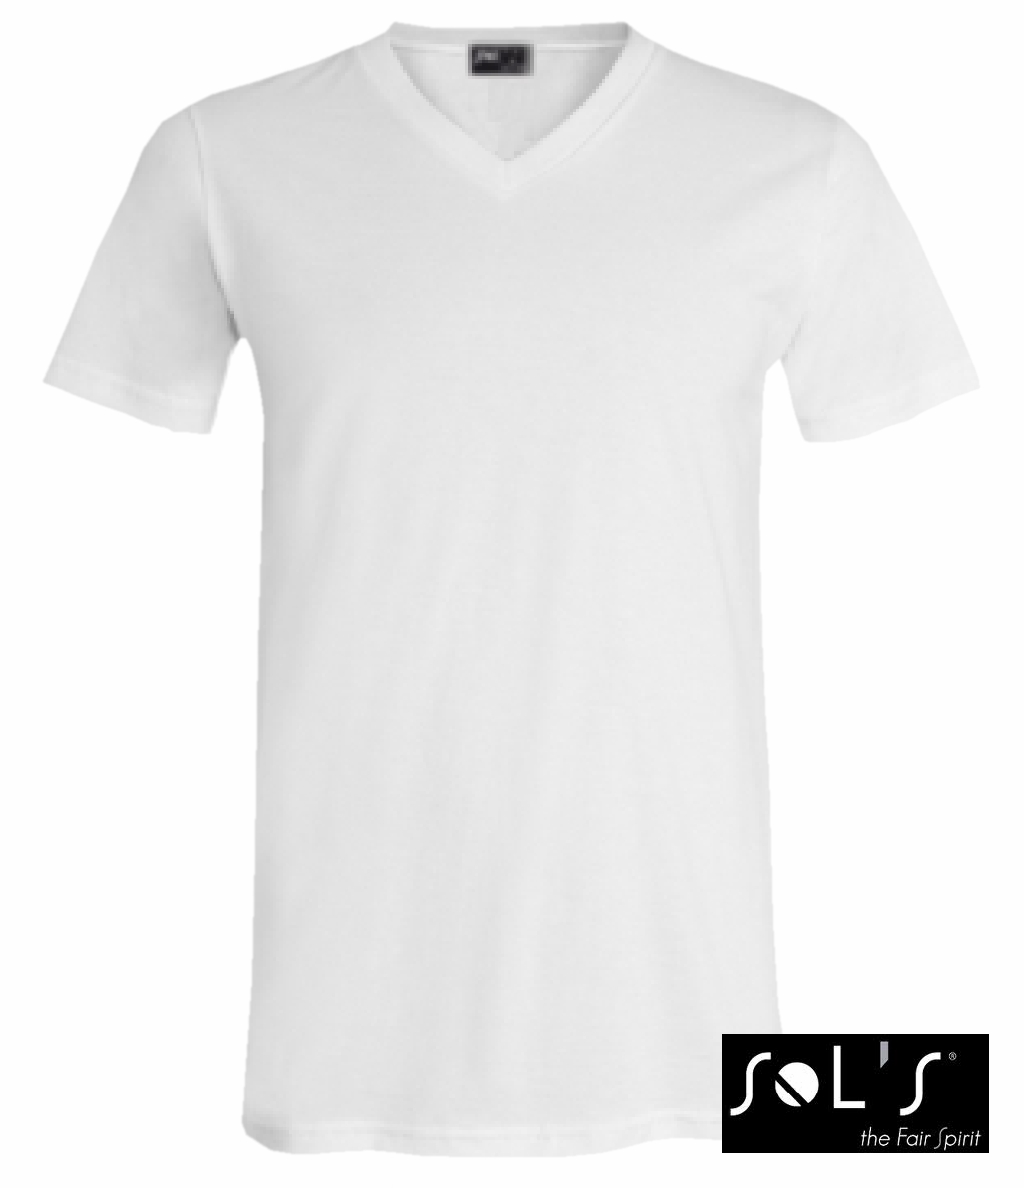 SOLs V-Neck Short Sleeve Tee Shirt Master (white) 12,69 